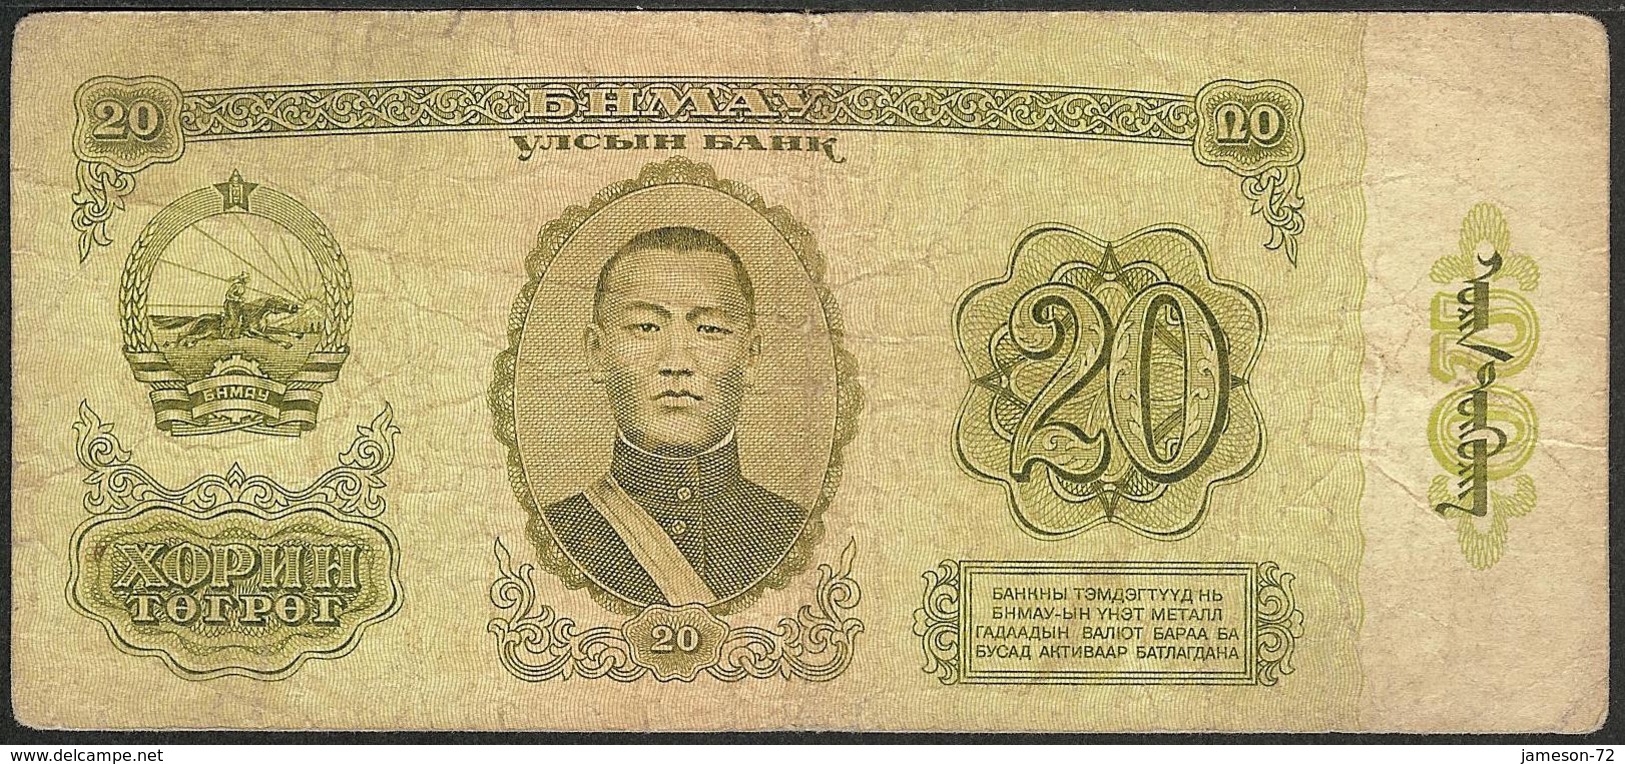 MONGOLIA - 20 Tugrik 1981 P# 46 Asia Banknote - Edelweiss Coins - Mongolia